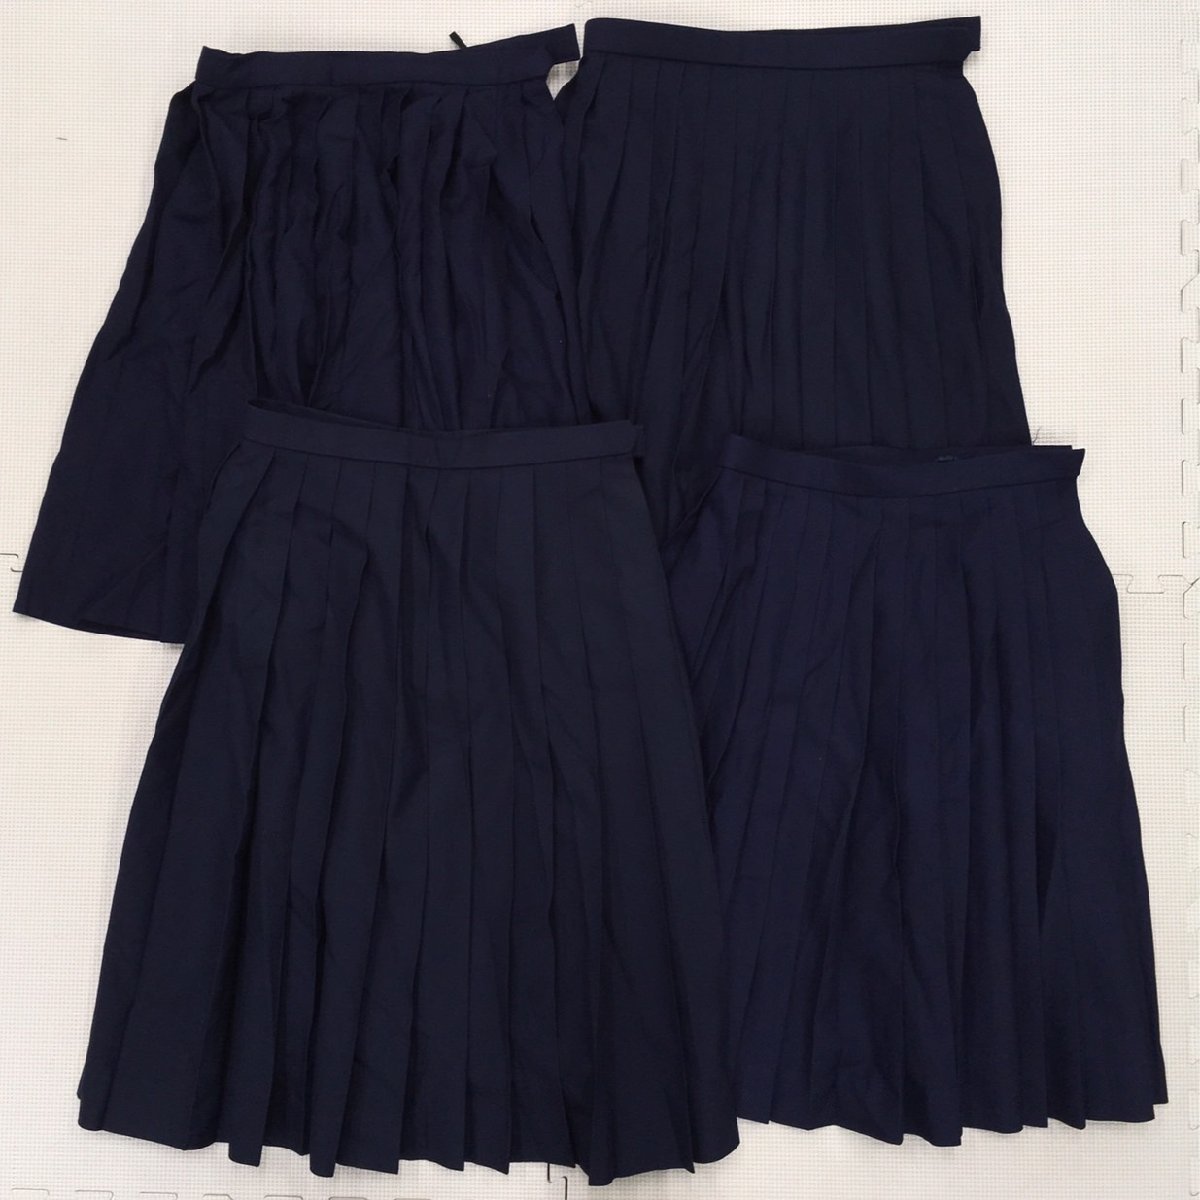 A134/( used / box ) woman uniform winter skirt 7 point / navy blue color /W62/W63/W66/W67/W68/ junior high school / high school / uniform / school uniform / winter / winter clothes / woman student / set sale 